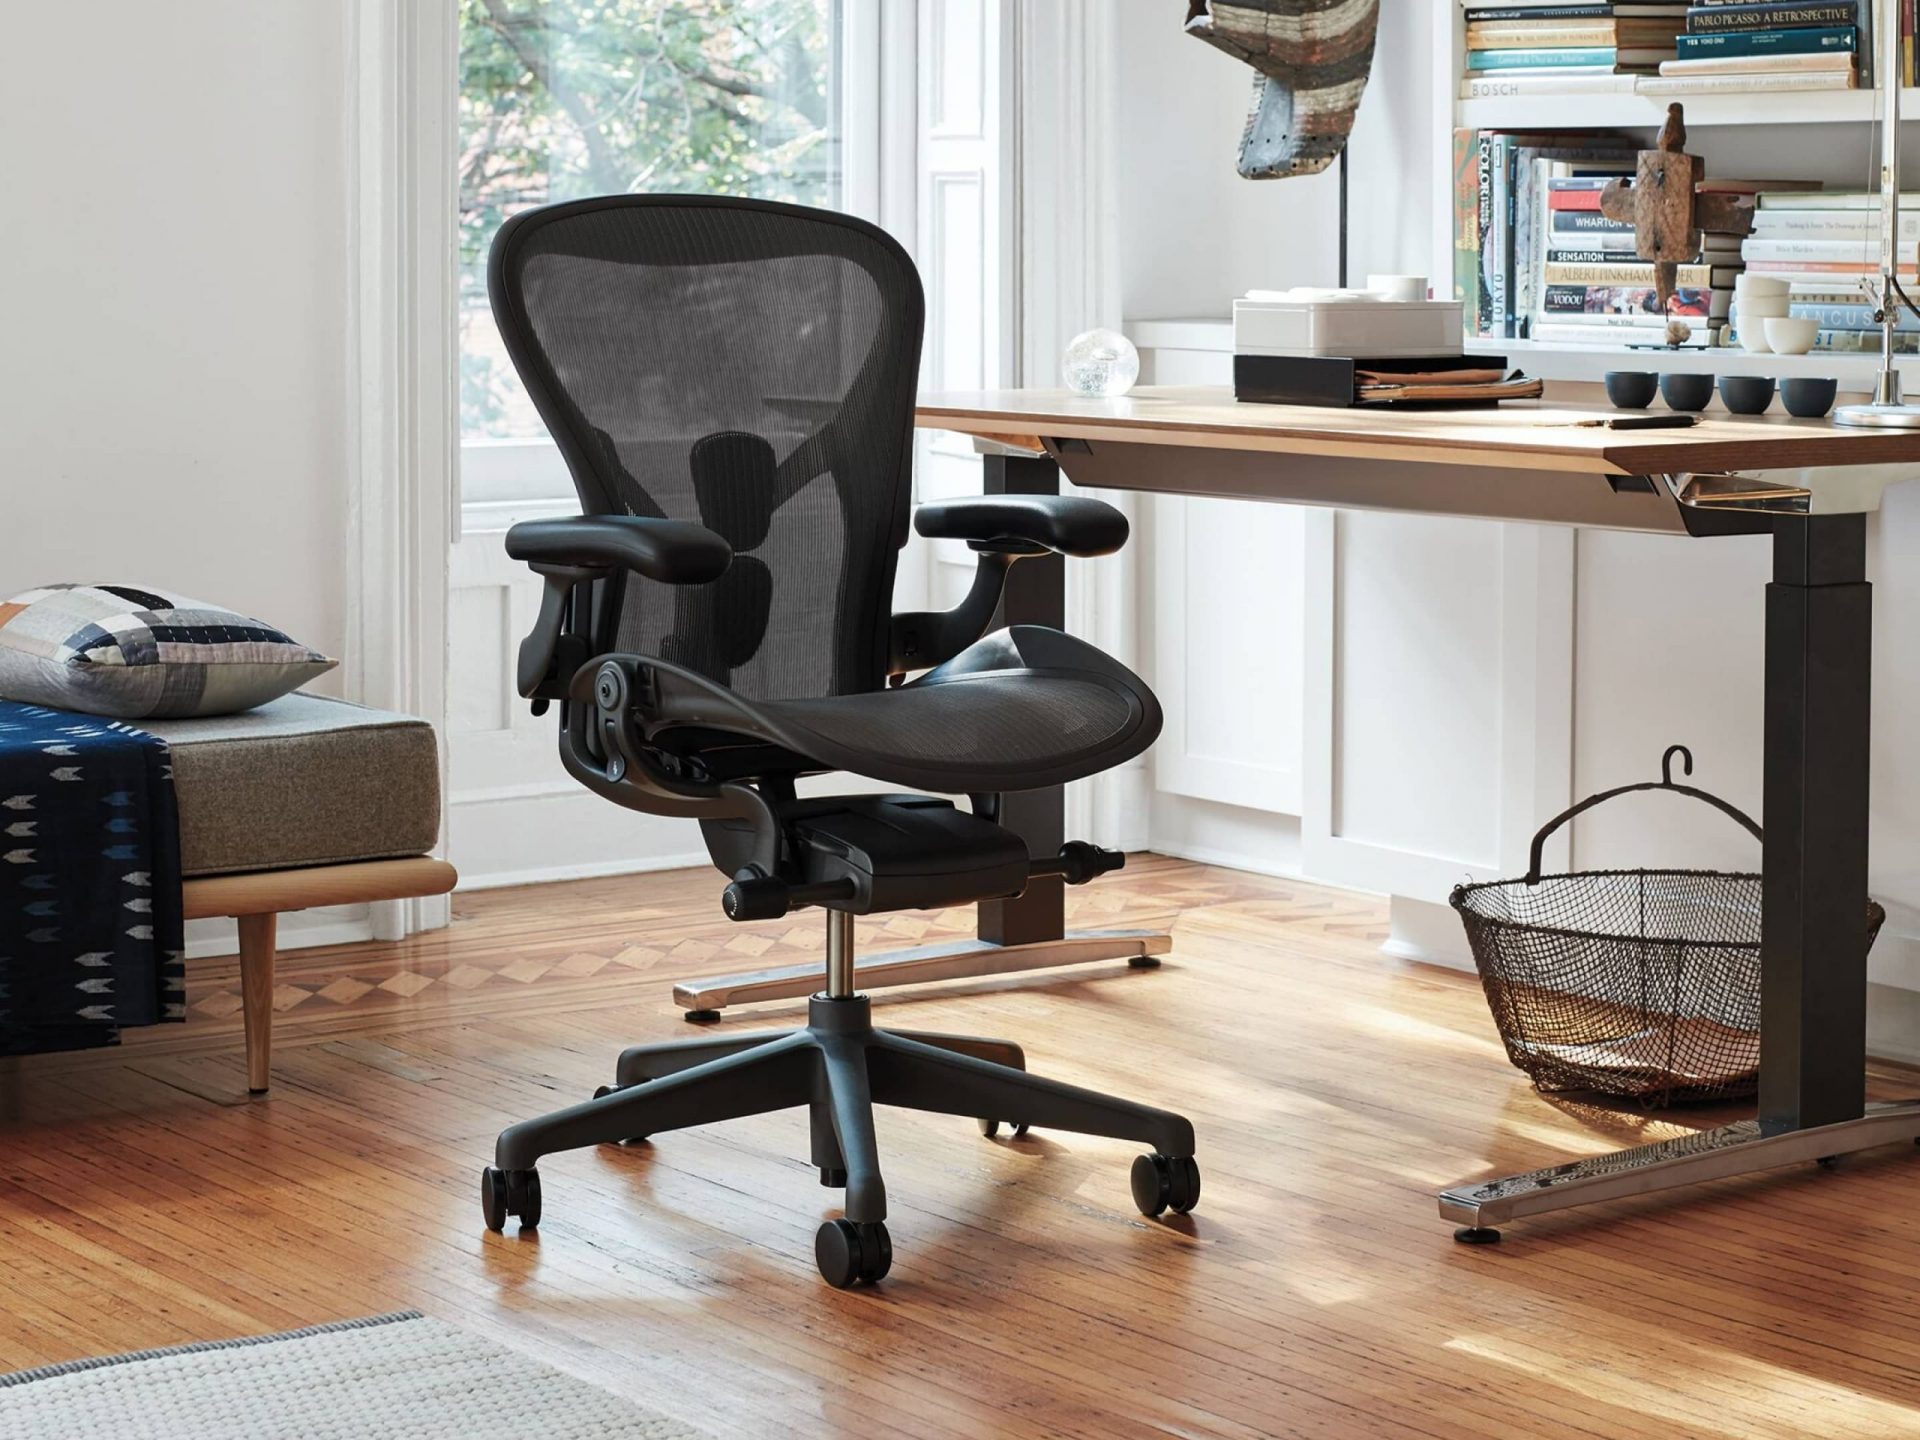 Sæt ud Fantasifulde over Herman Miller Ergonomic Chairs | Ergonomic Office Chairs